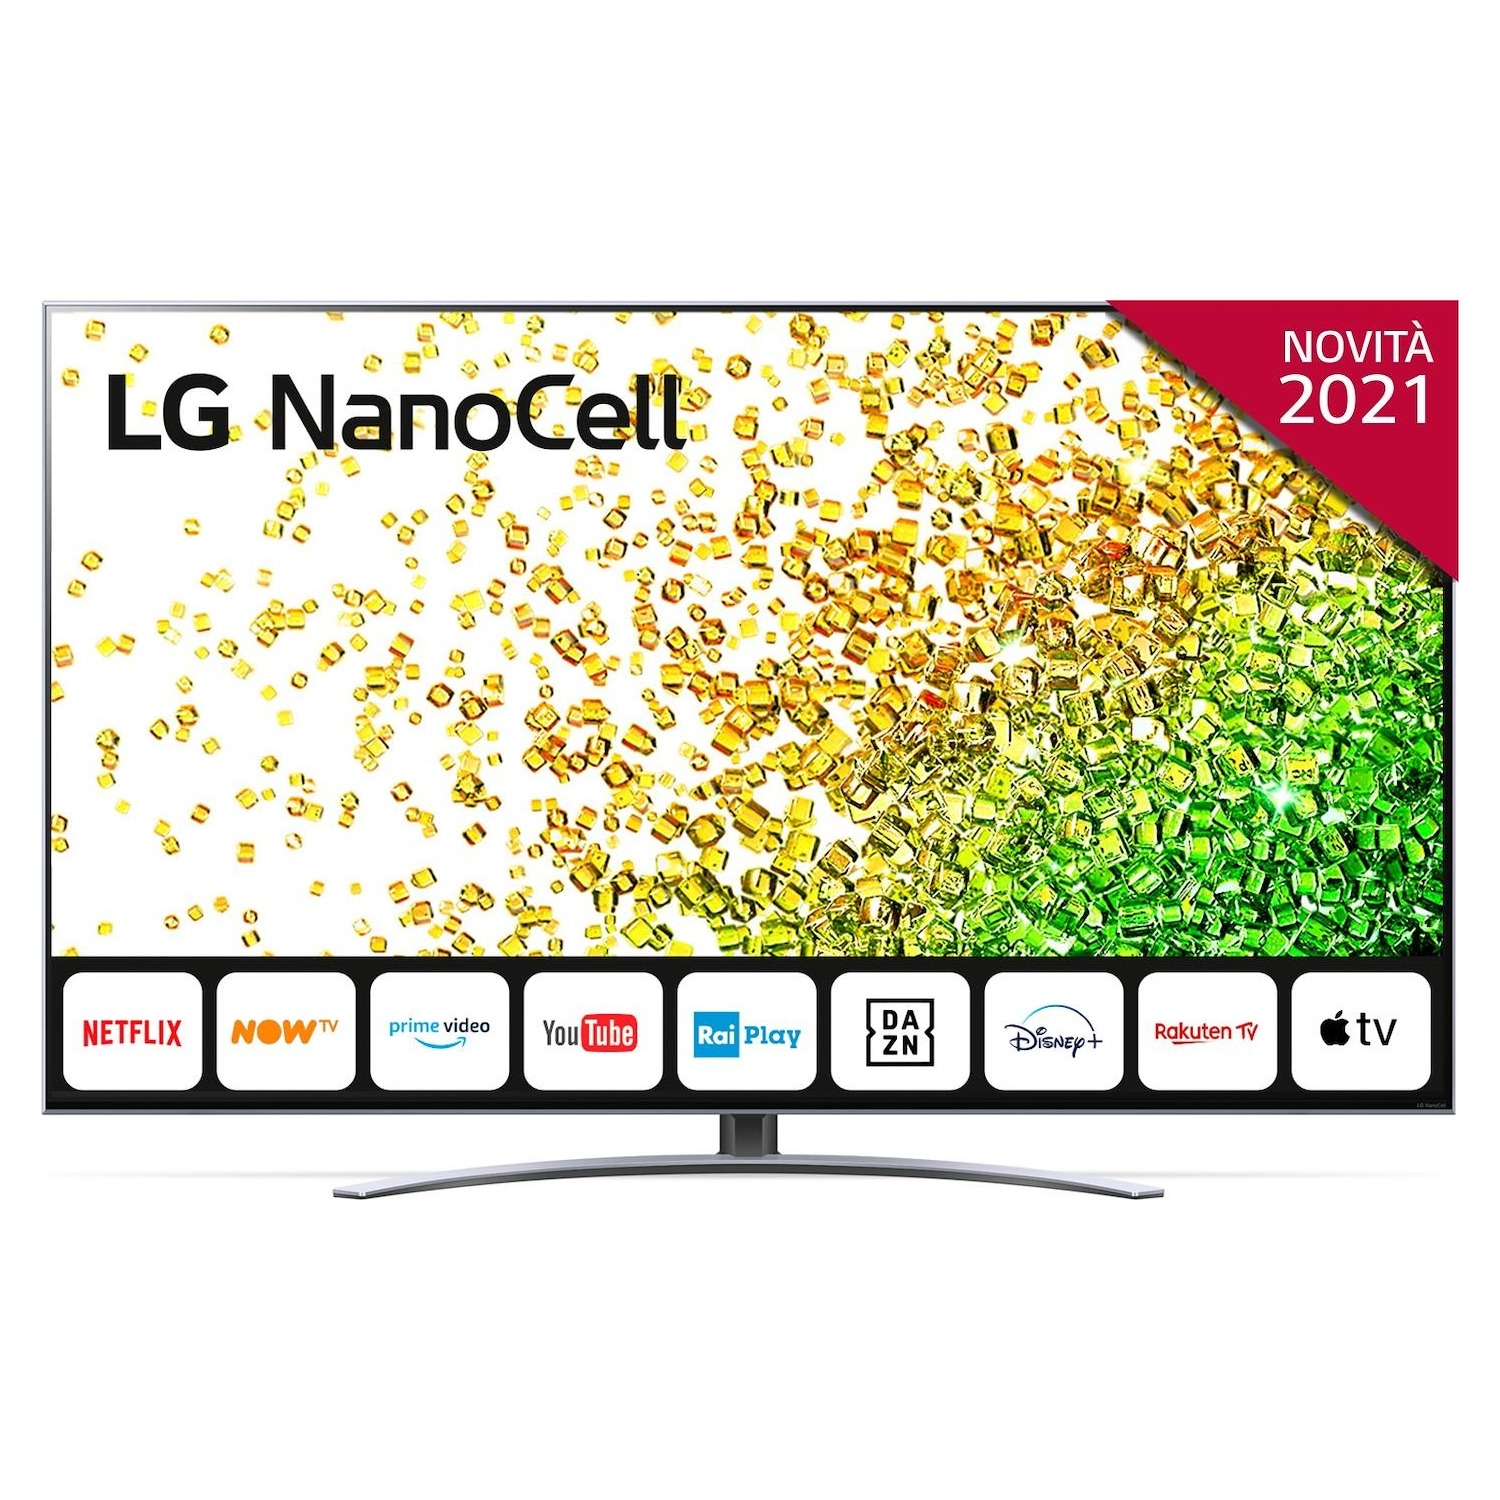 Immagine per TV LED LG 65NANO886 Calibrato 4K e FULL HD da DIMOStore